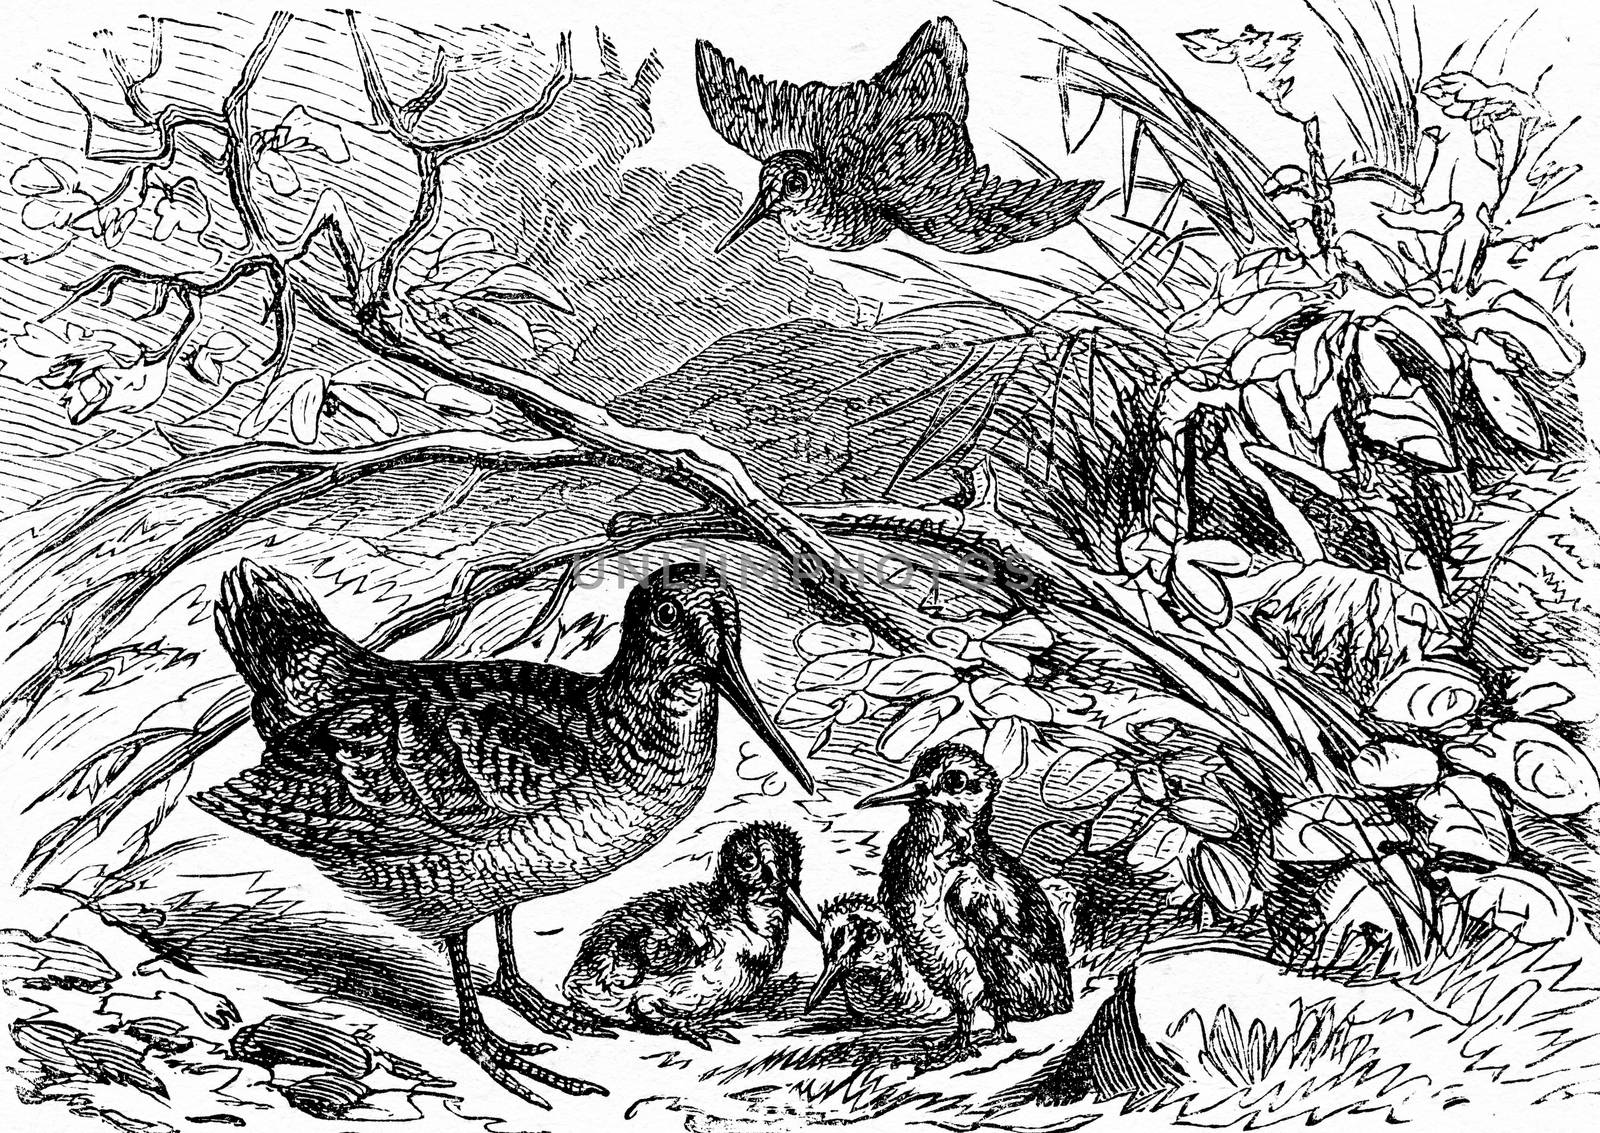 A family of woodcock, vintage engraved illustration. From La Vie dans la nature, 1890.
